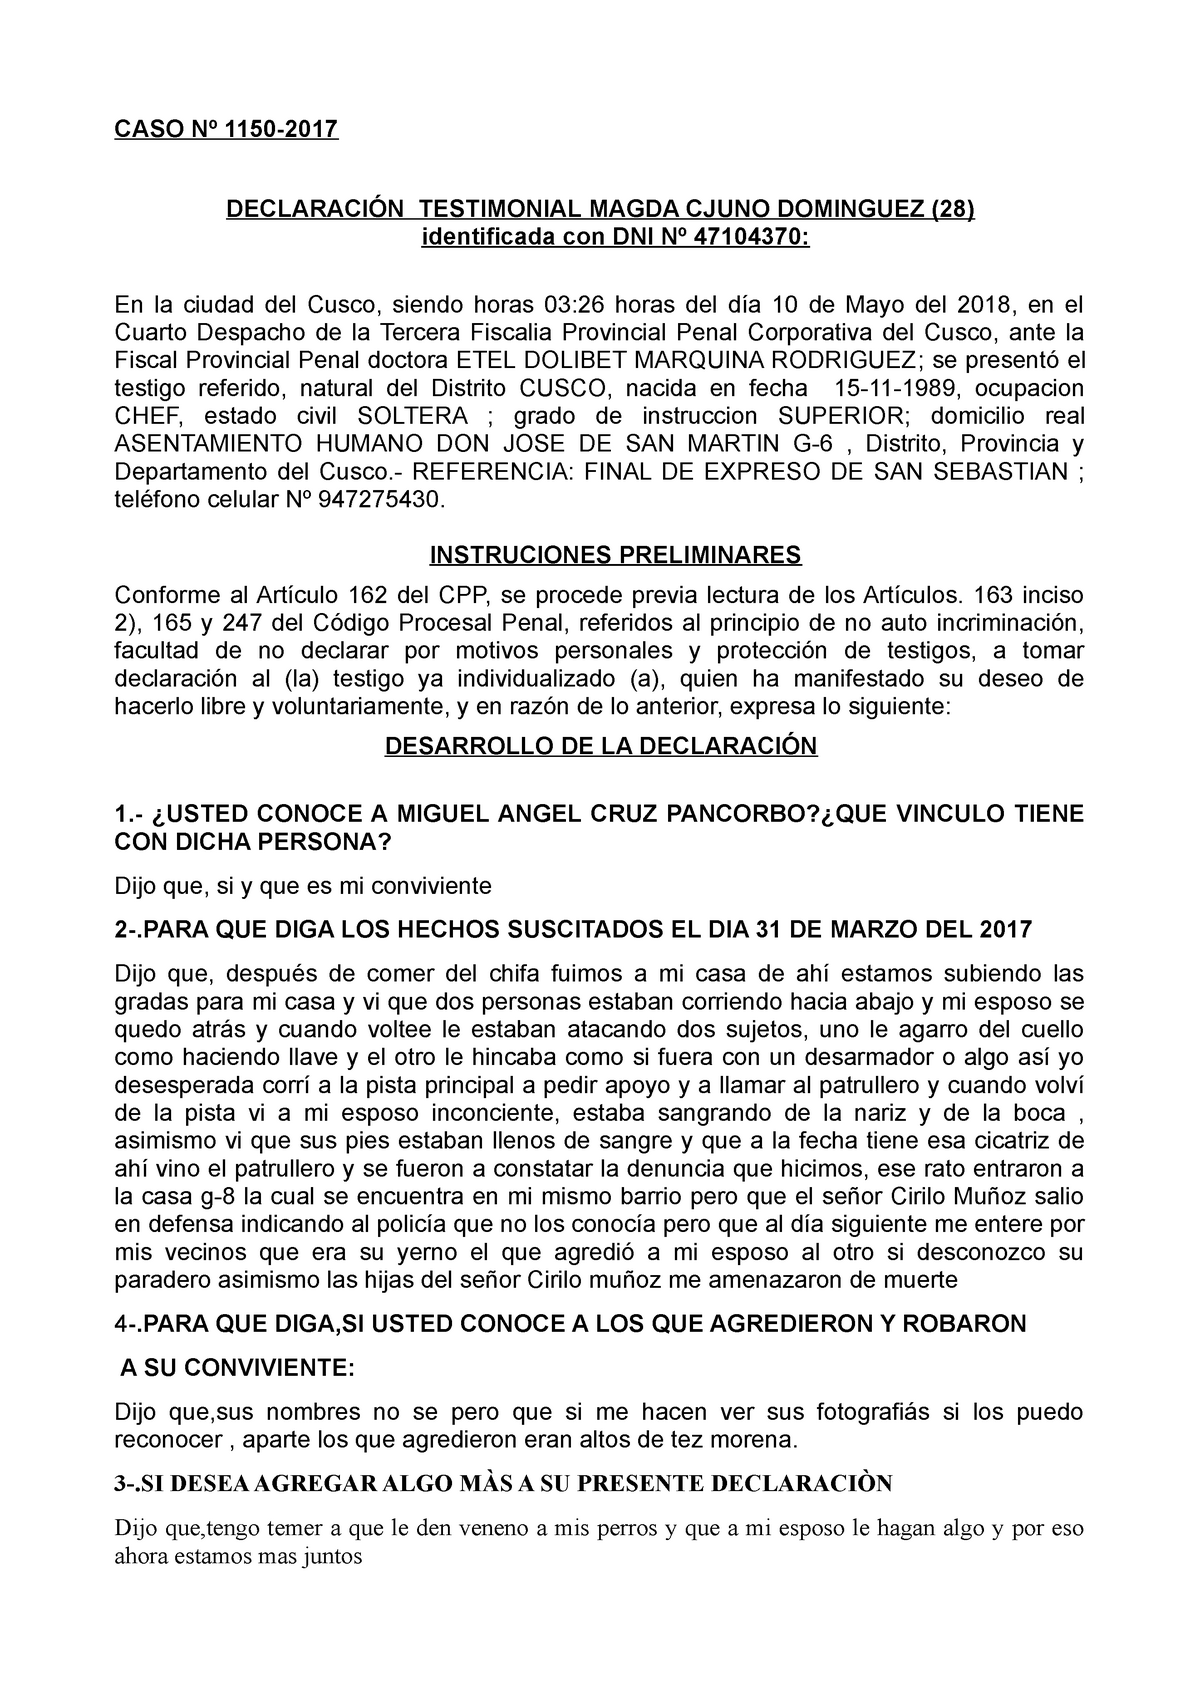 Declaracion testimonial - CASO TESTIMONIAL MAGDA CJUNO DOMINGUEZ (28)  identificada con DNI 47104370: - Studocu